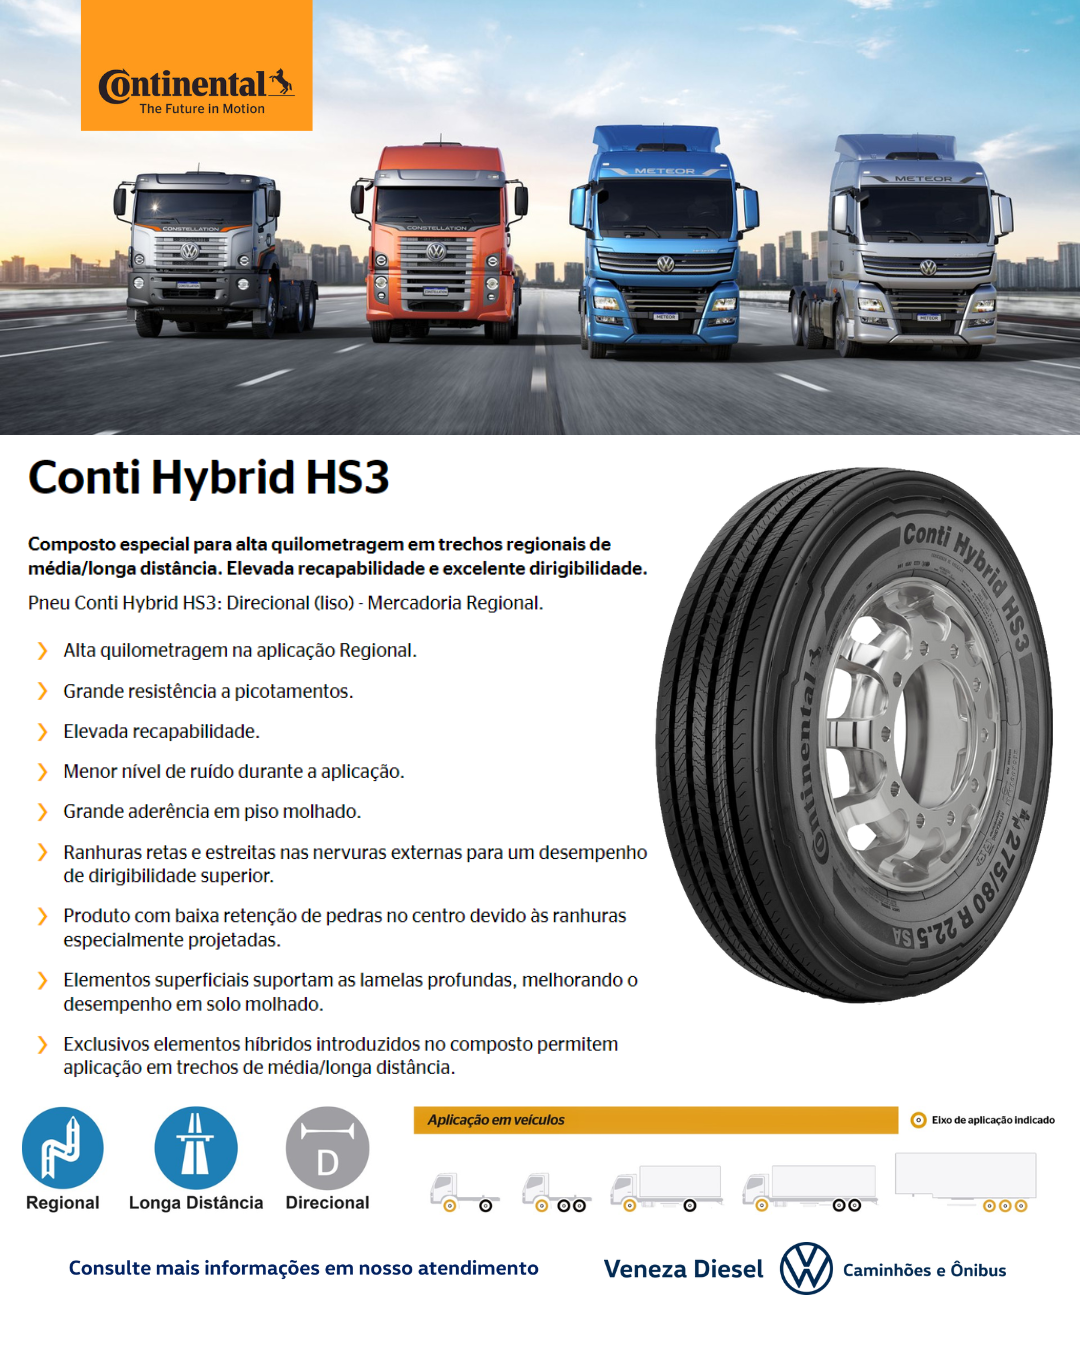 Conti Hybrid HS3